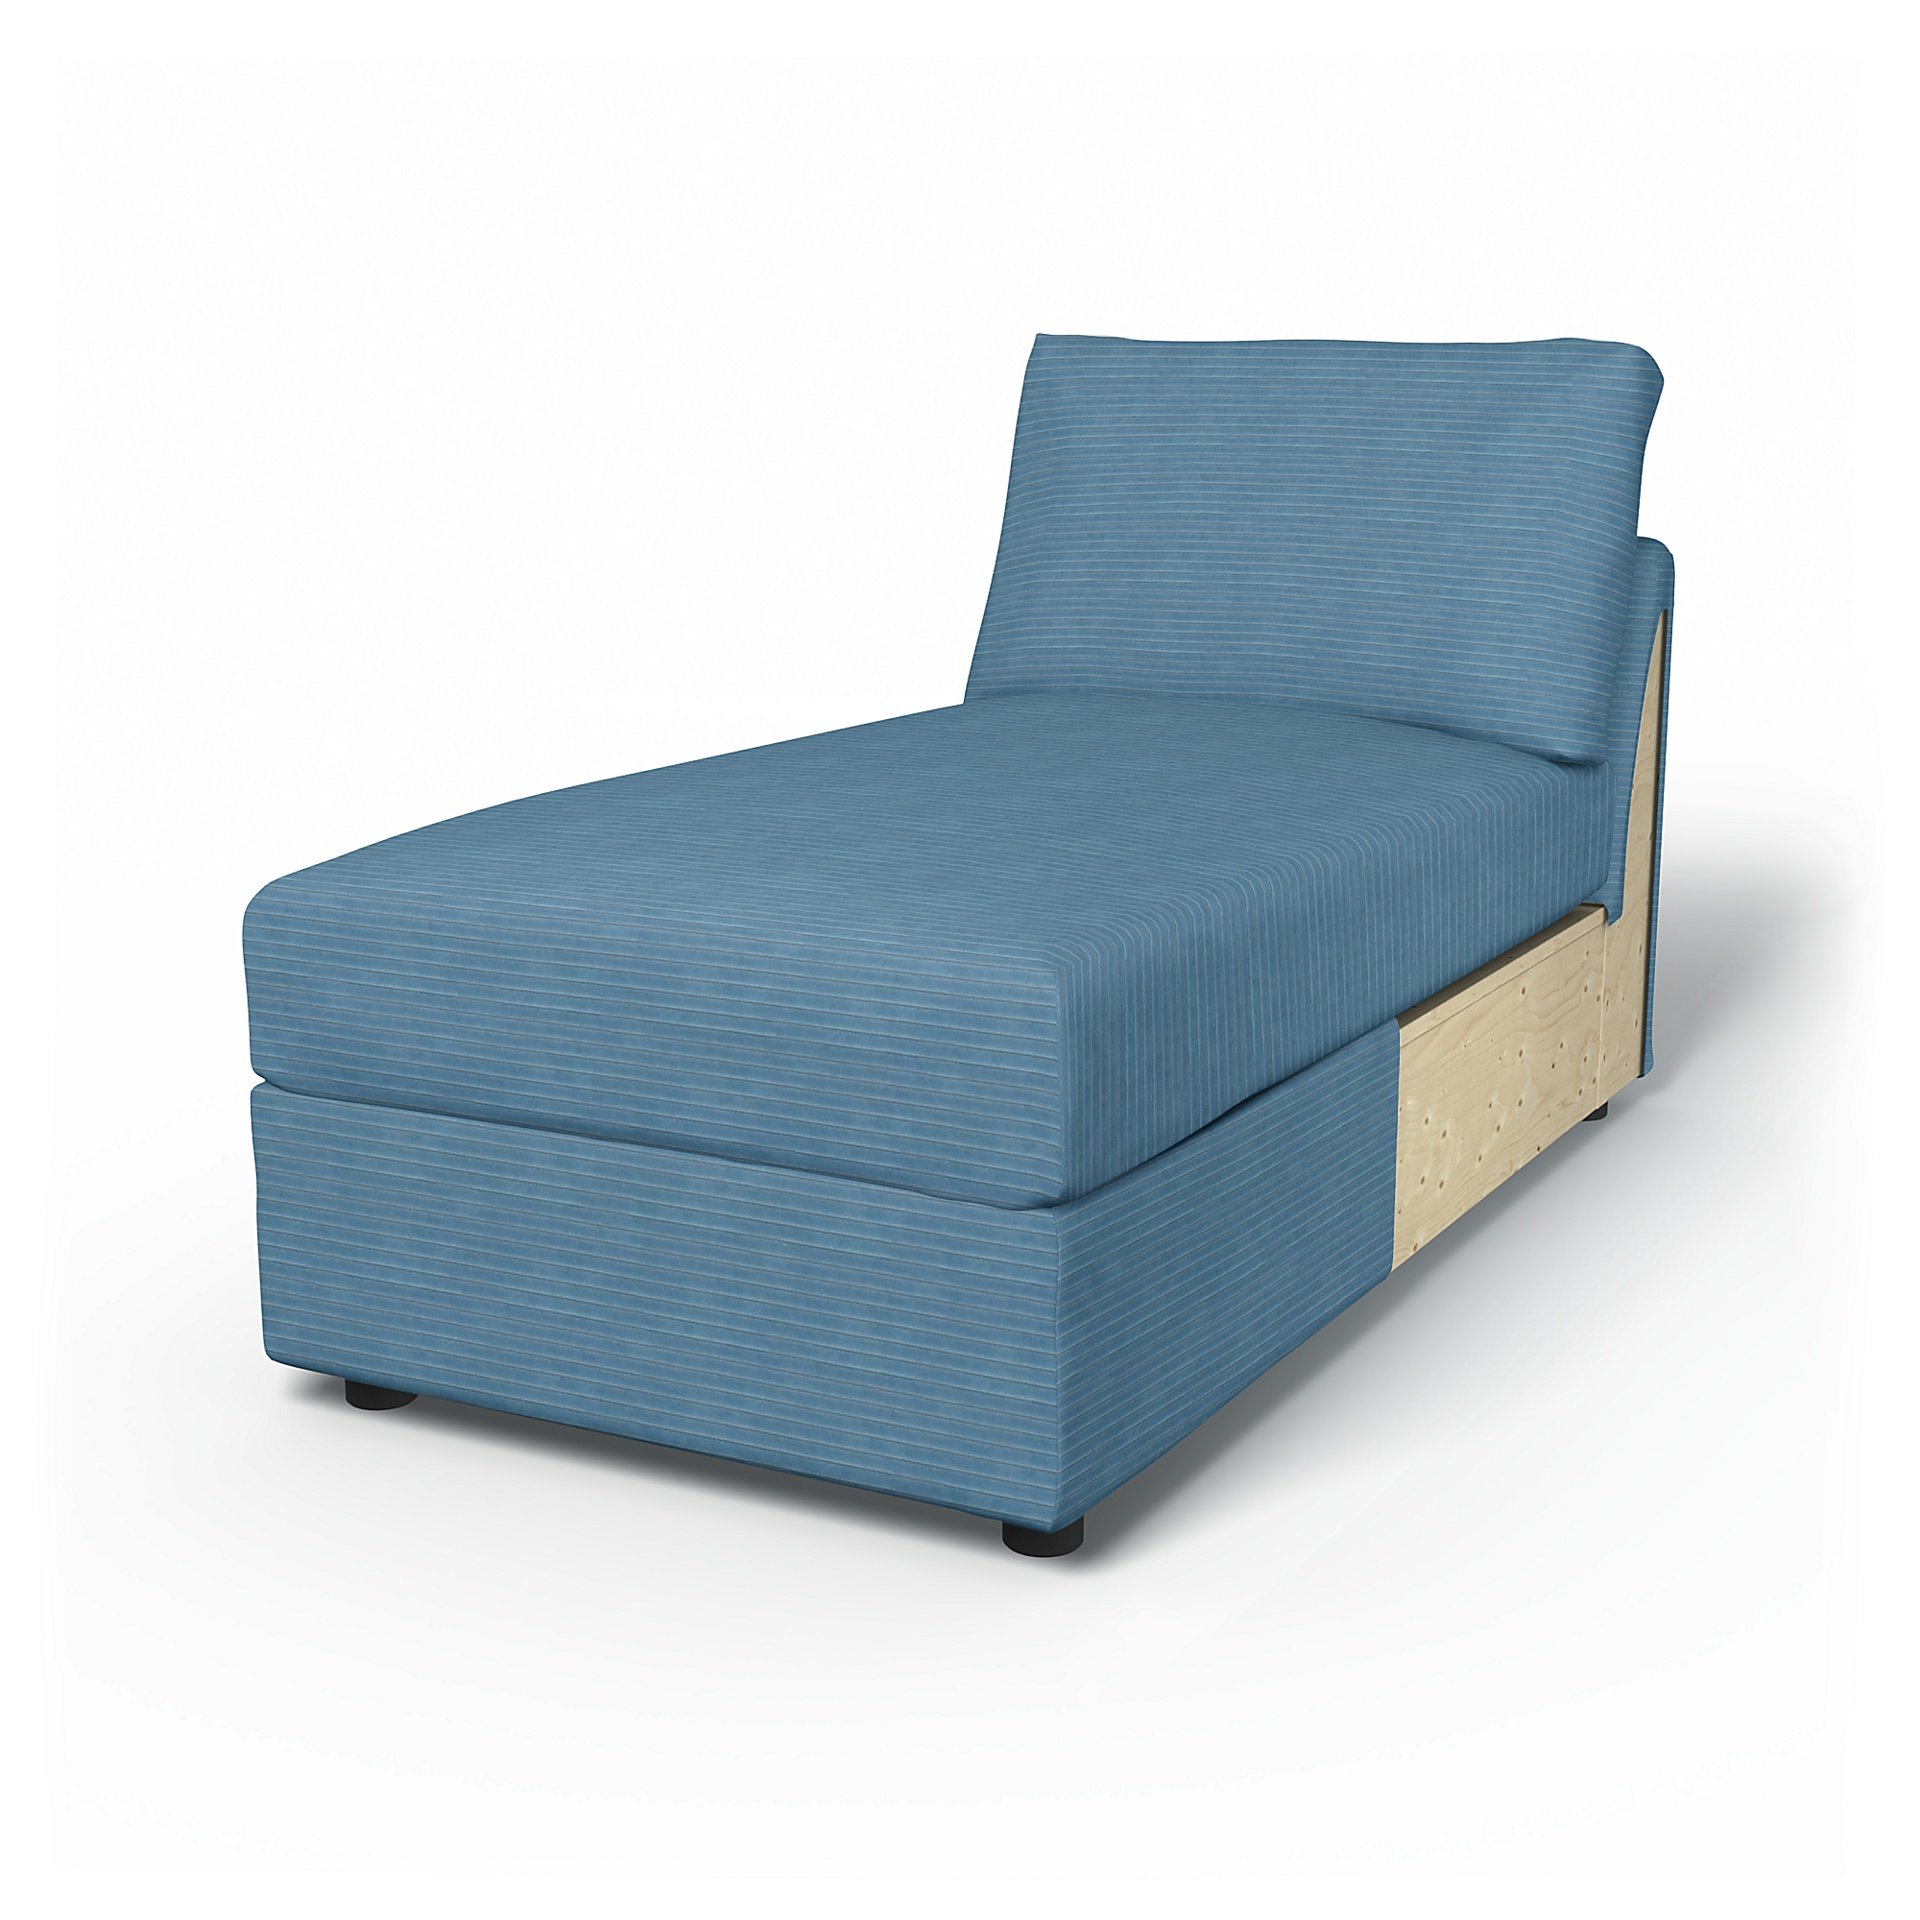 IKEA - Vimle Chaise Longue Cover, Sky Blue, Corduroy - Bemz